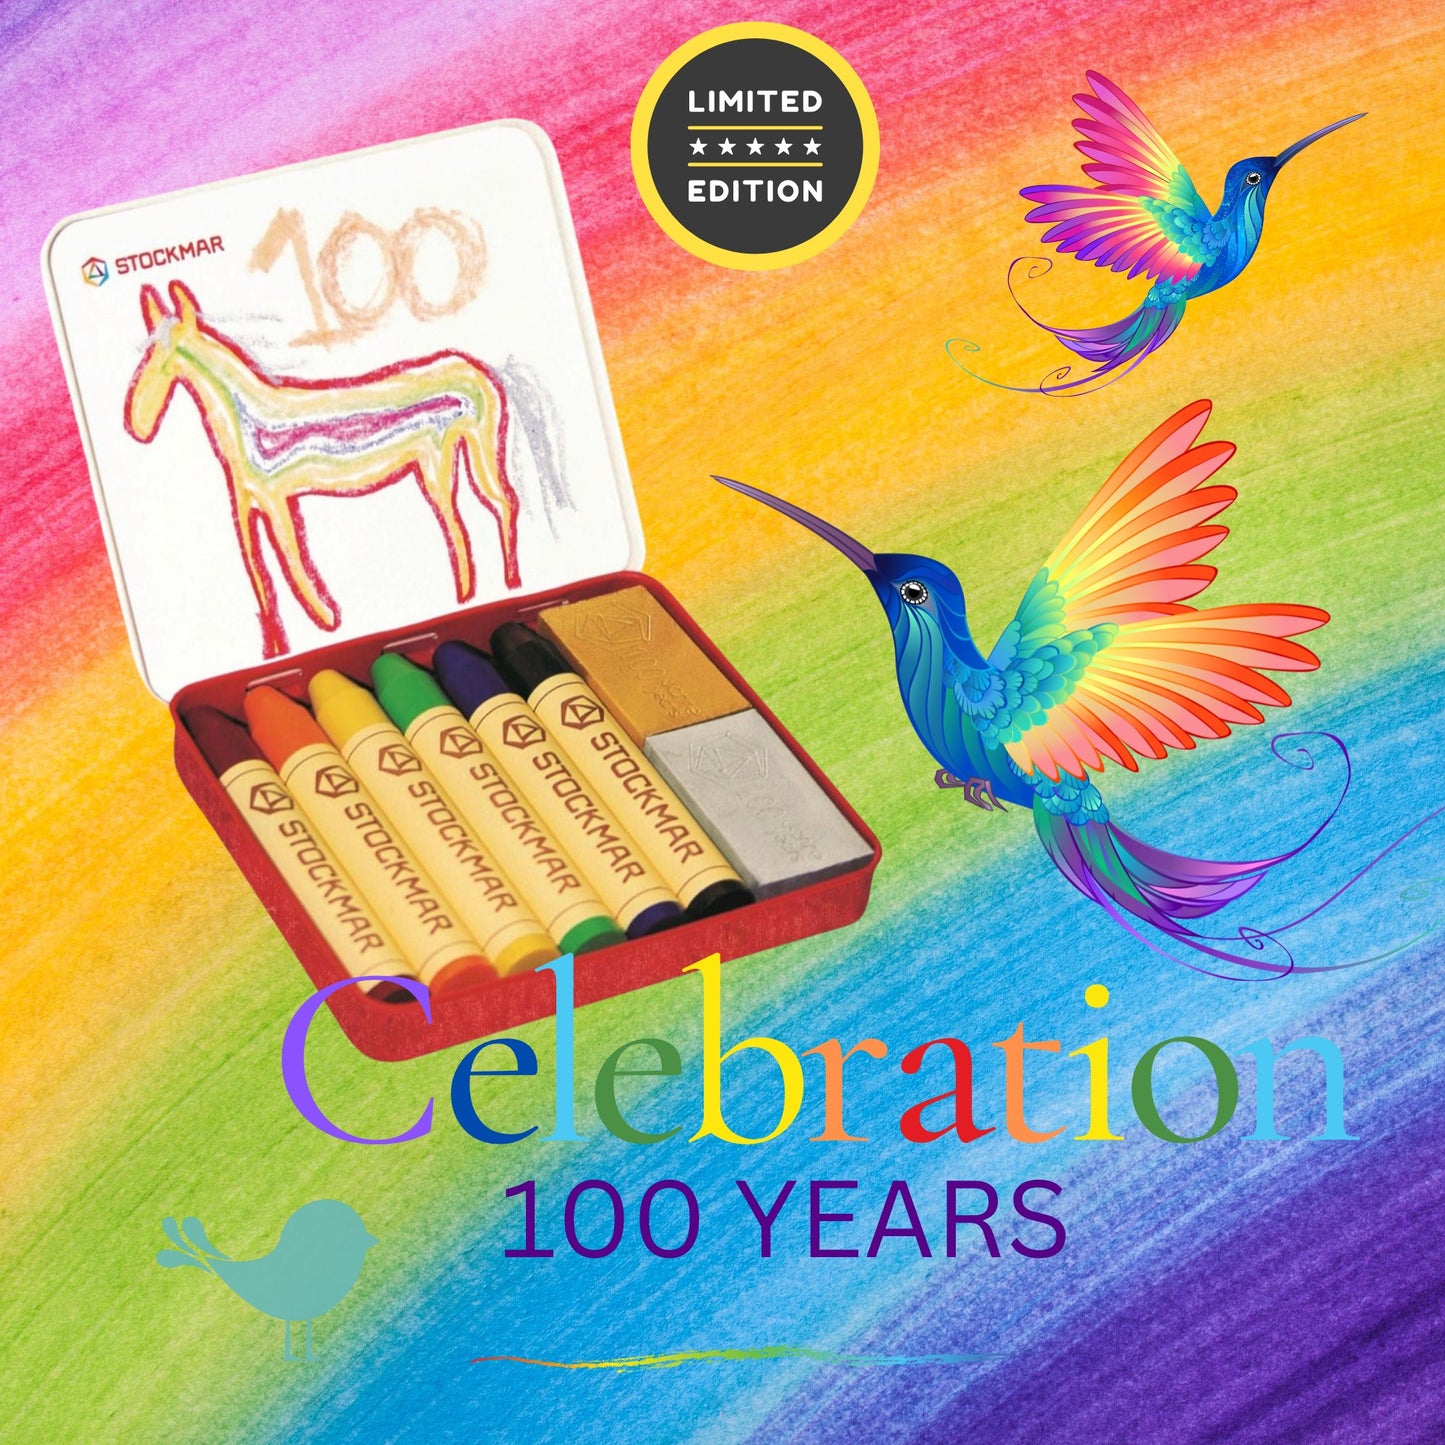 STOCKMAR Limited Edition Rainbow Crayons - Alder & Alouette